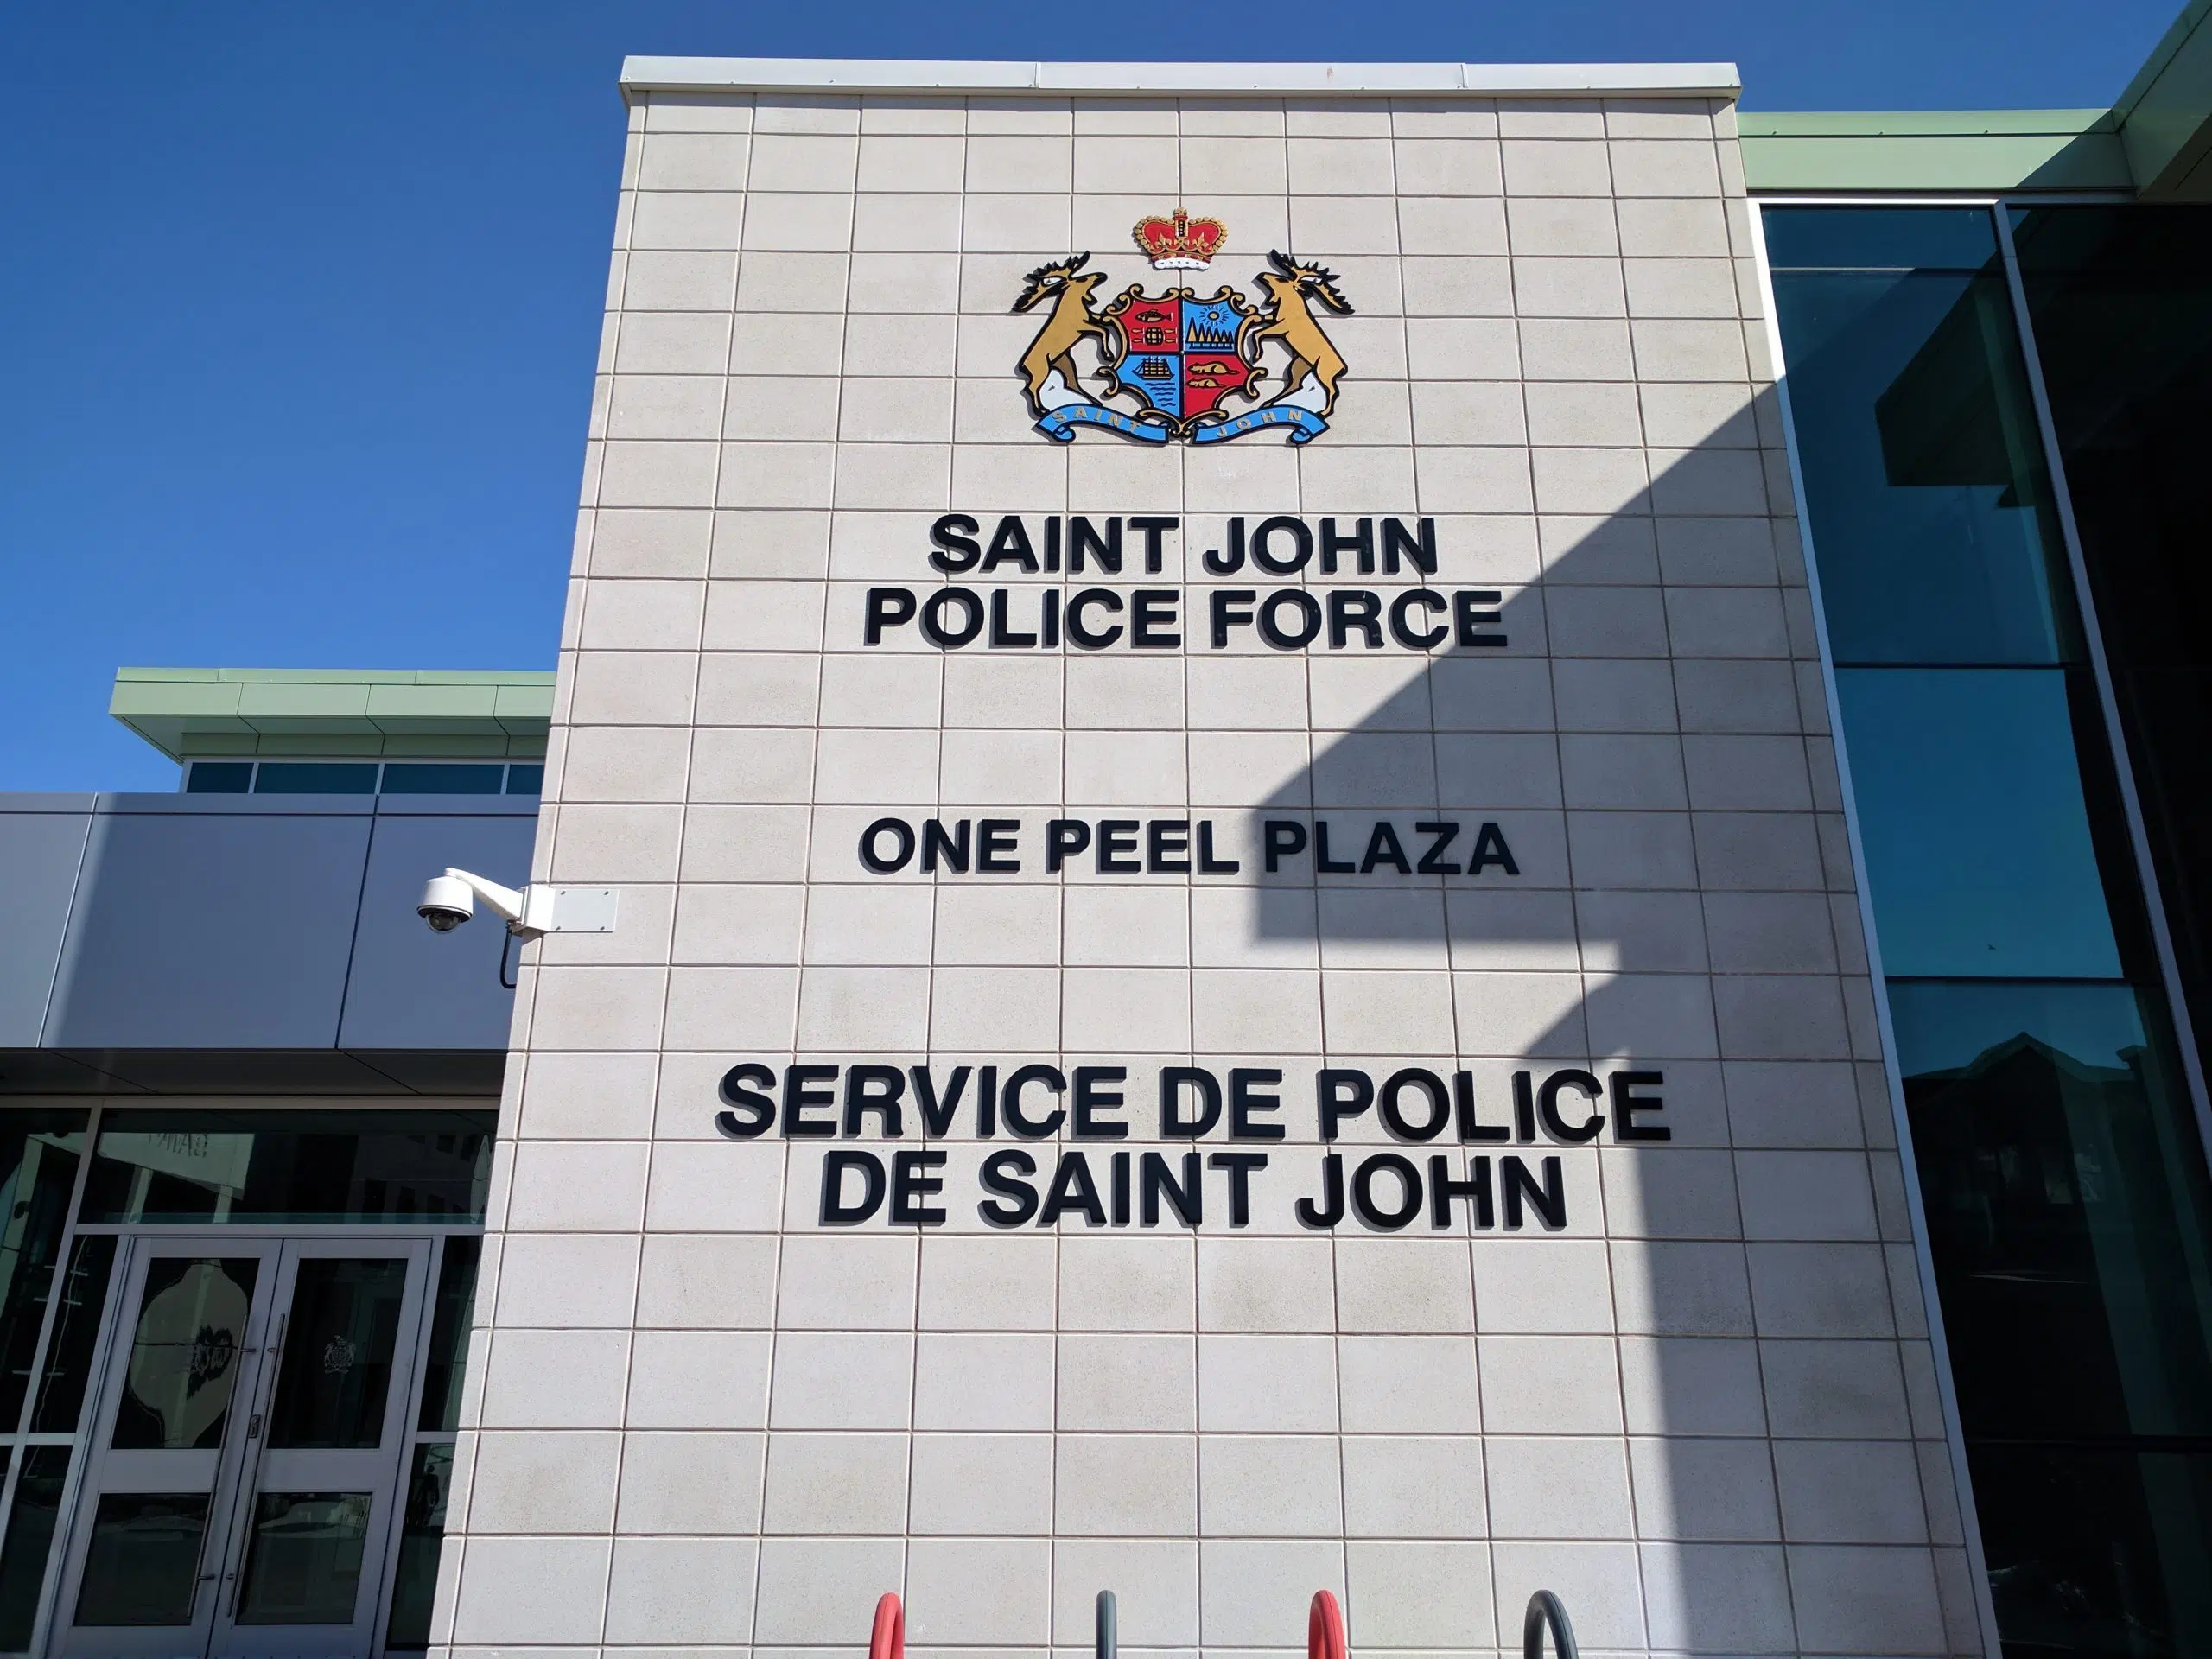 Death in Saint John police custody ruled accidental: report